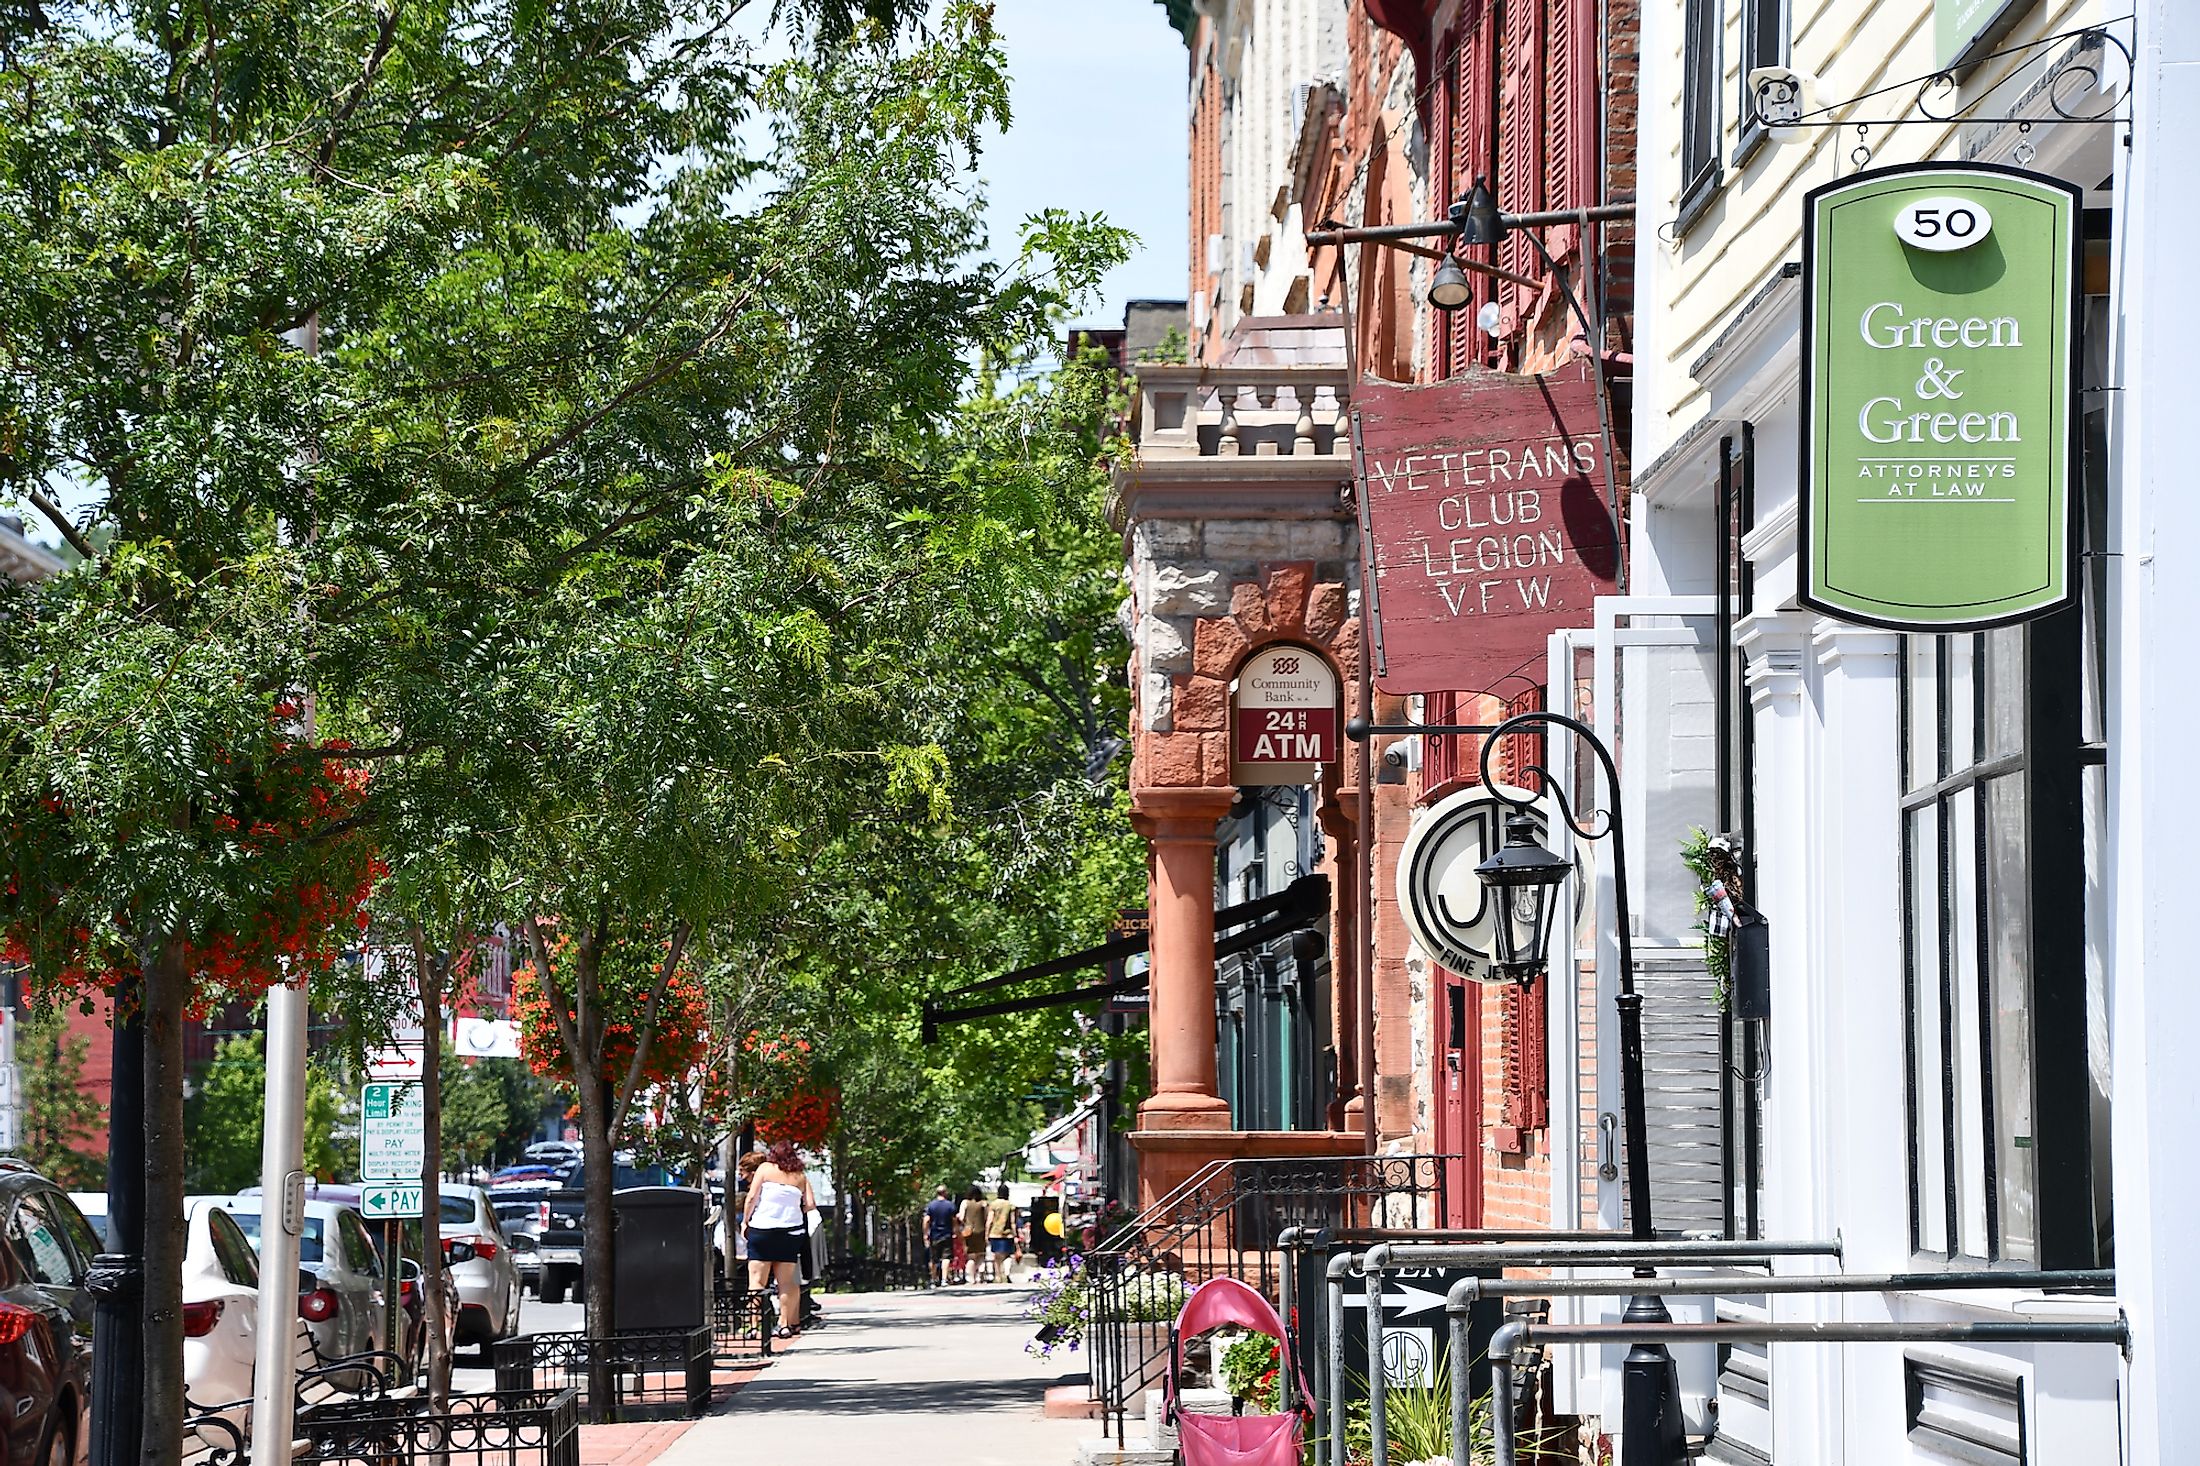 Main Street in Cooperstown, New York state. Editorial credit: Ritu Manoj Jethani / Shutterstock.com